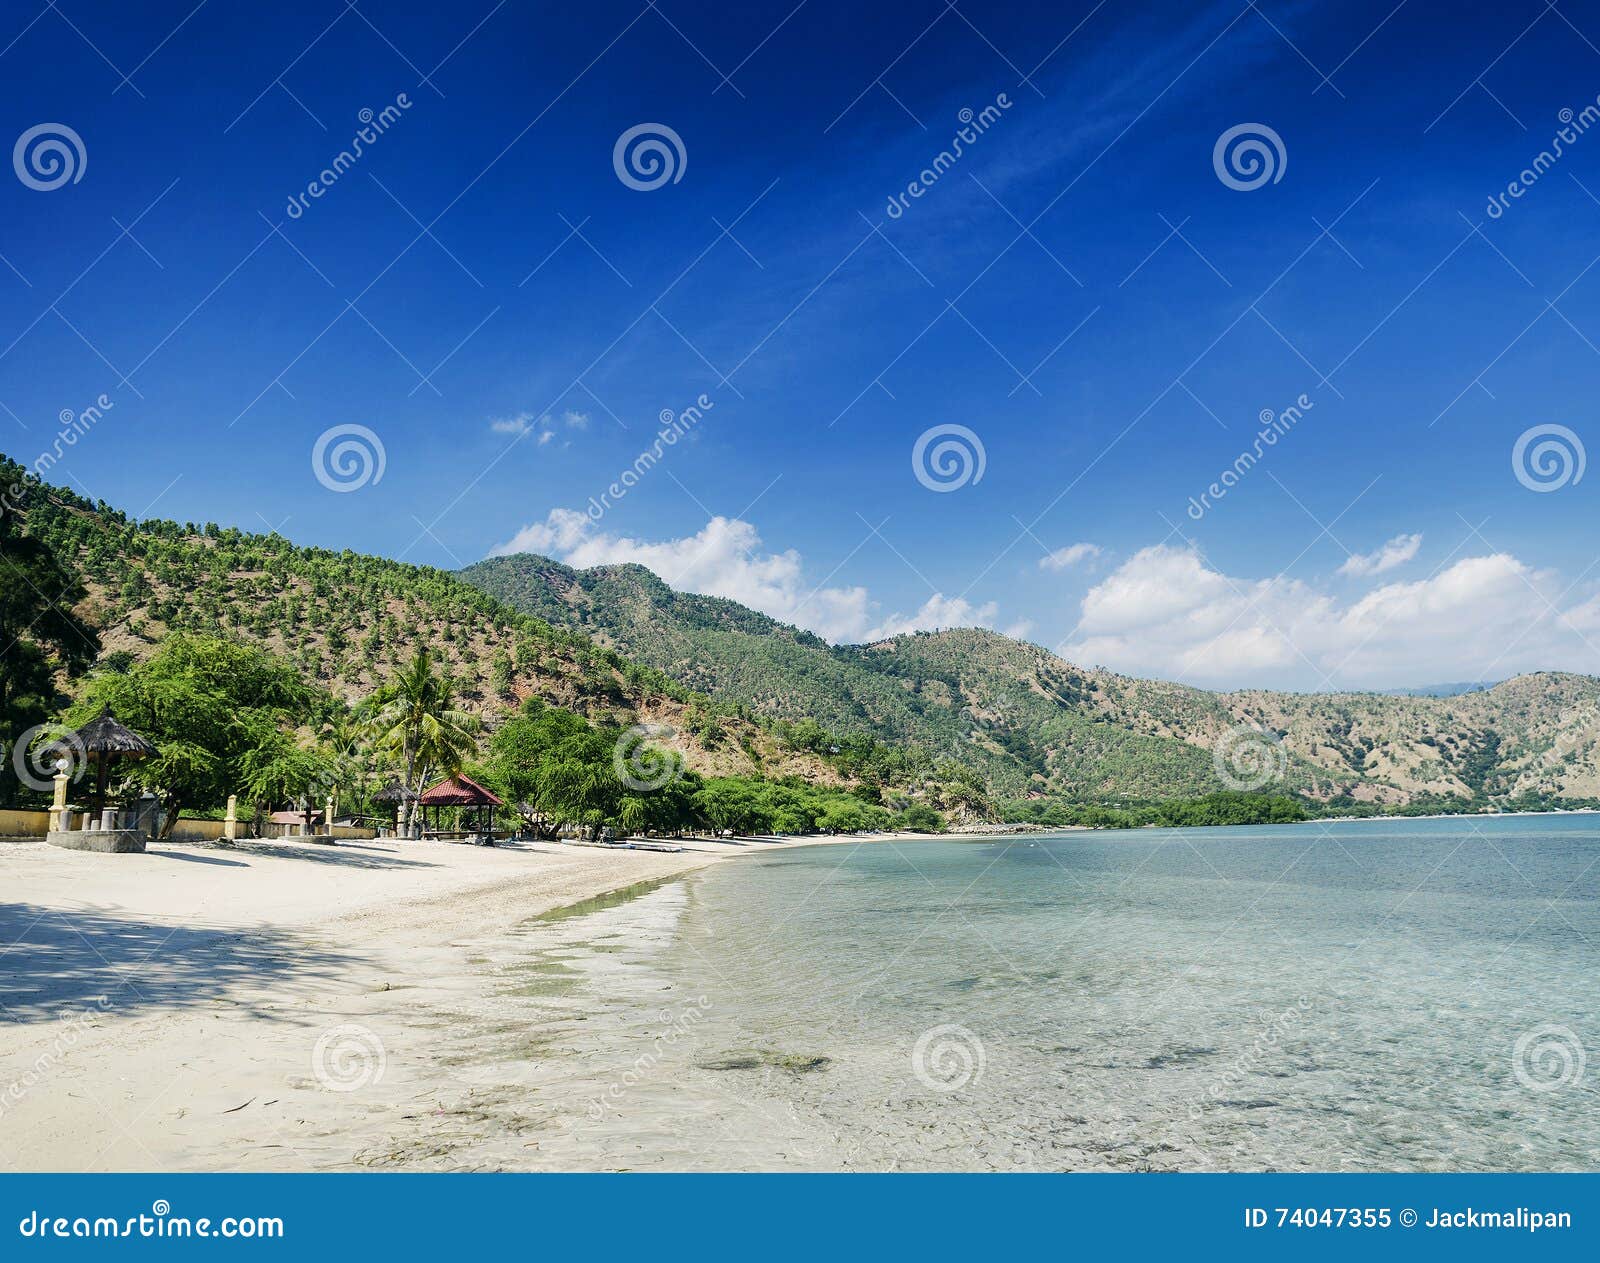 areia branca beach and coastline near dili in east timor